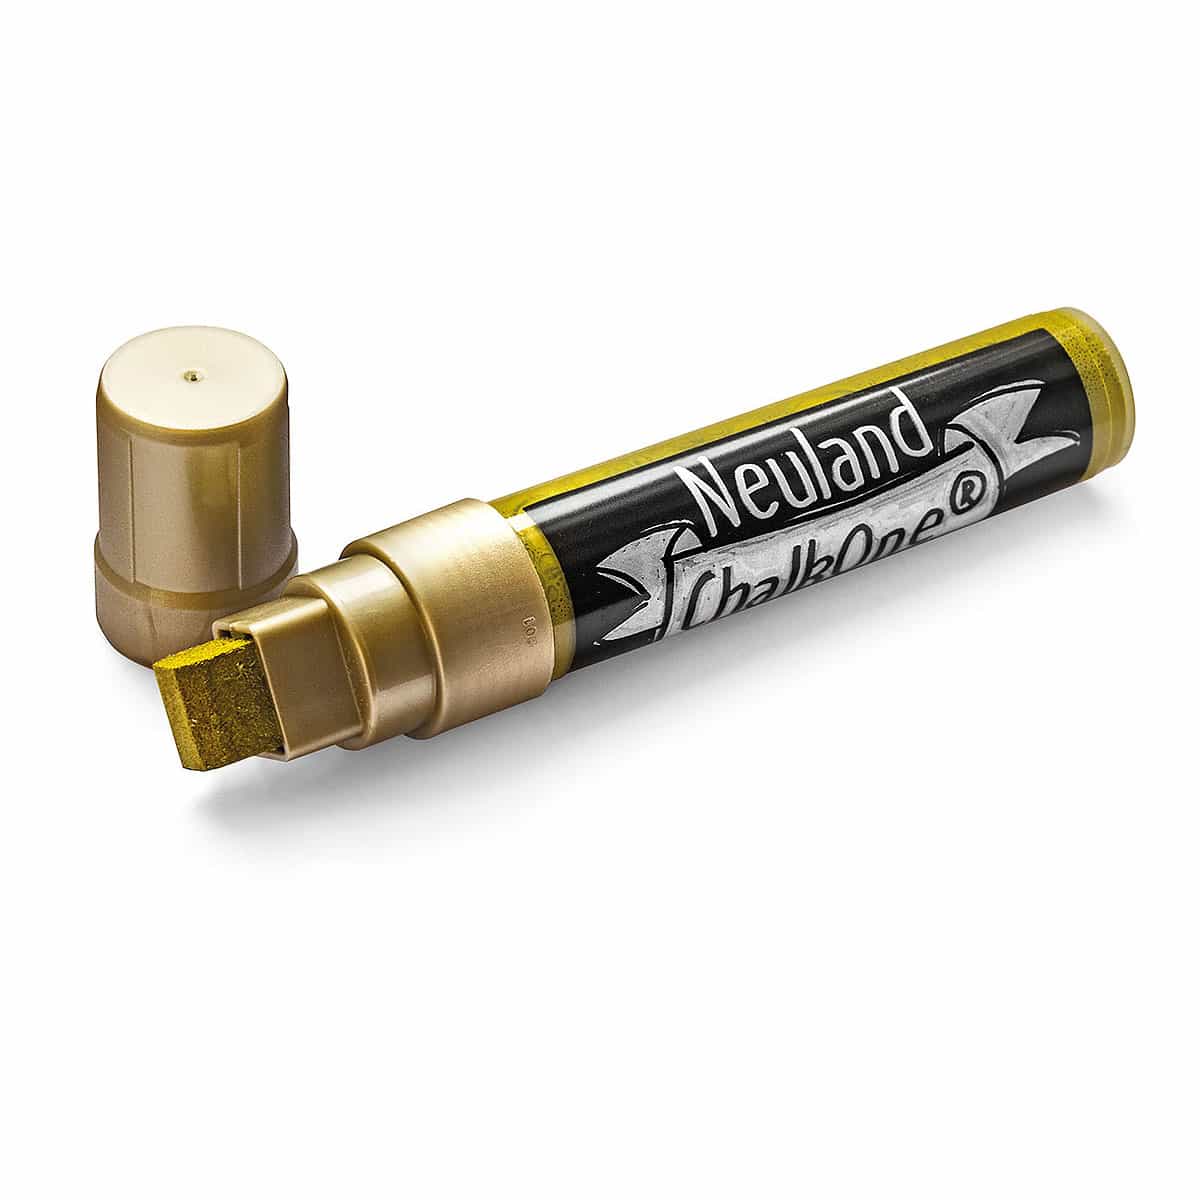 Neuland ChalkOne®, wigpunt 5-15 mm, enkele kleuren- c554 gold